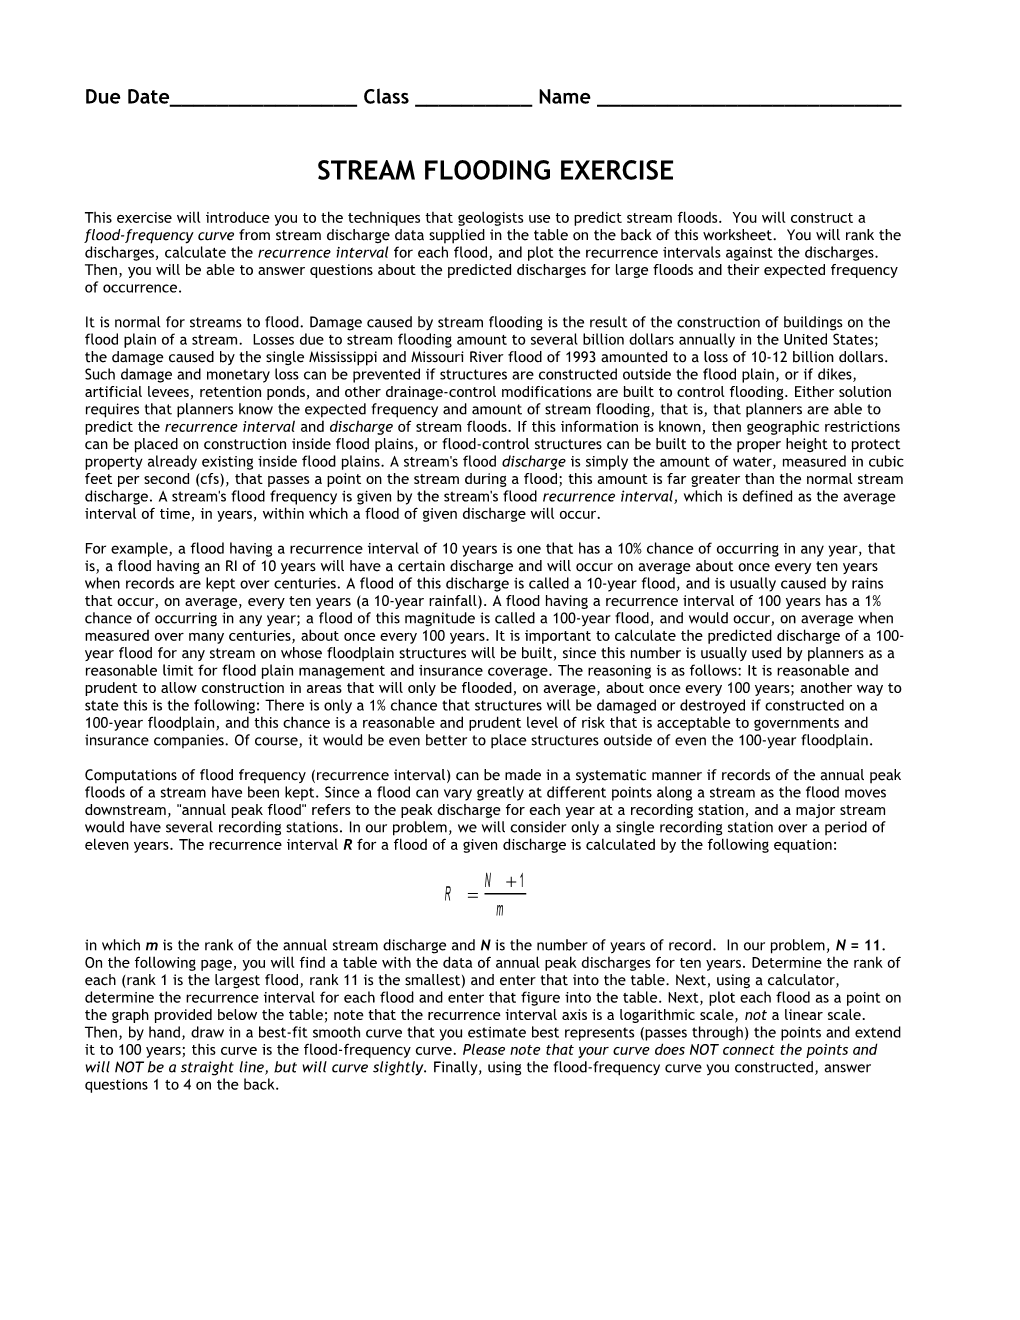 Stream Flooding Exercise